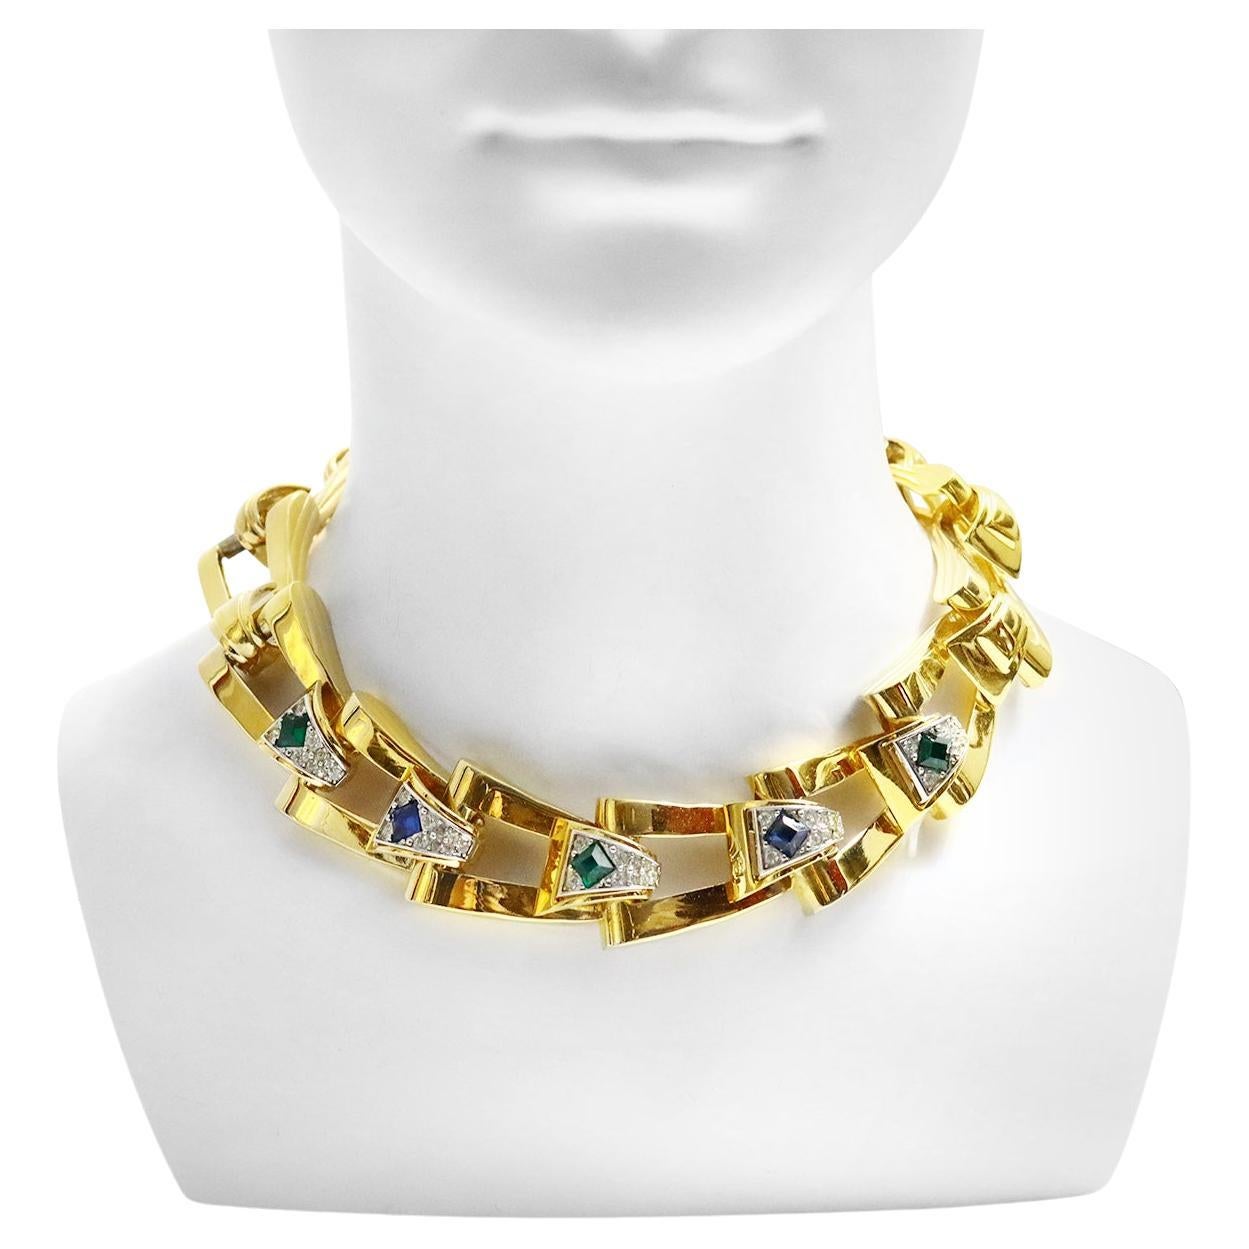 Vintage Givenchy Diamante and Gold Tone Link Necklace Circa 1980s